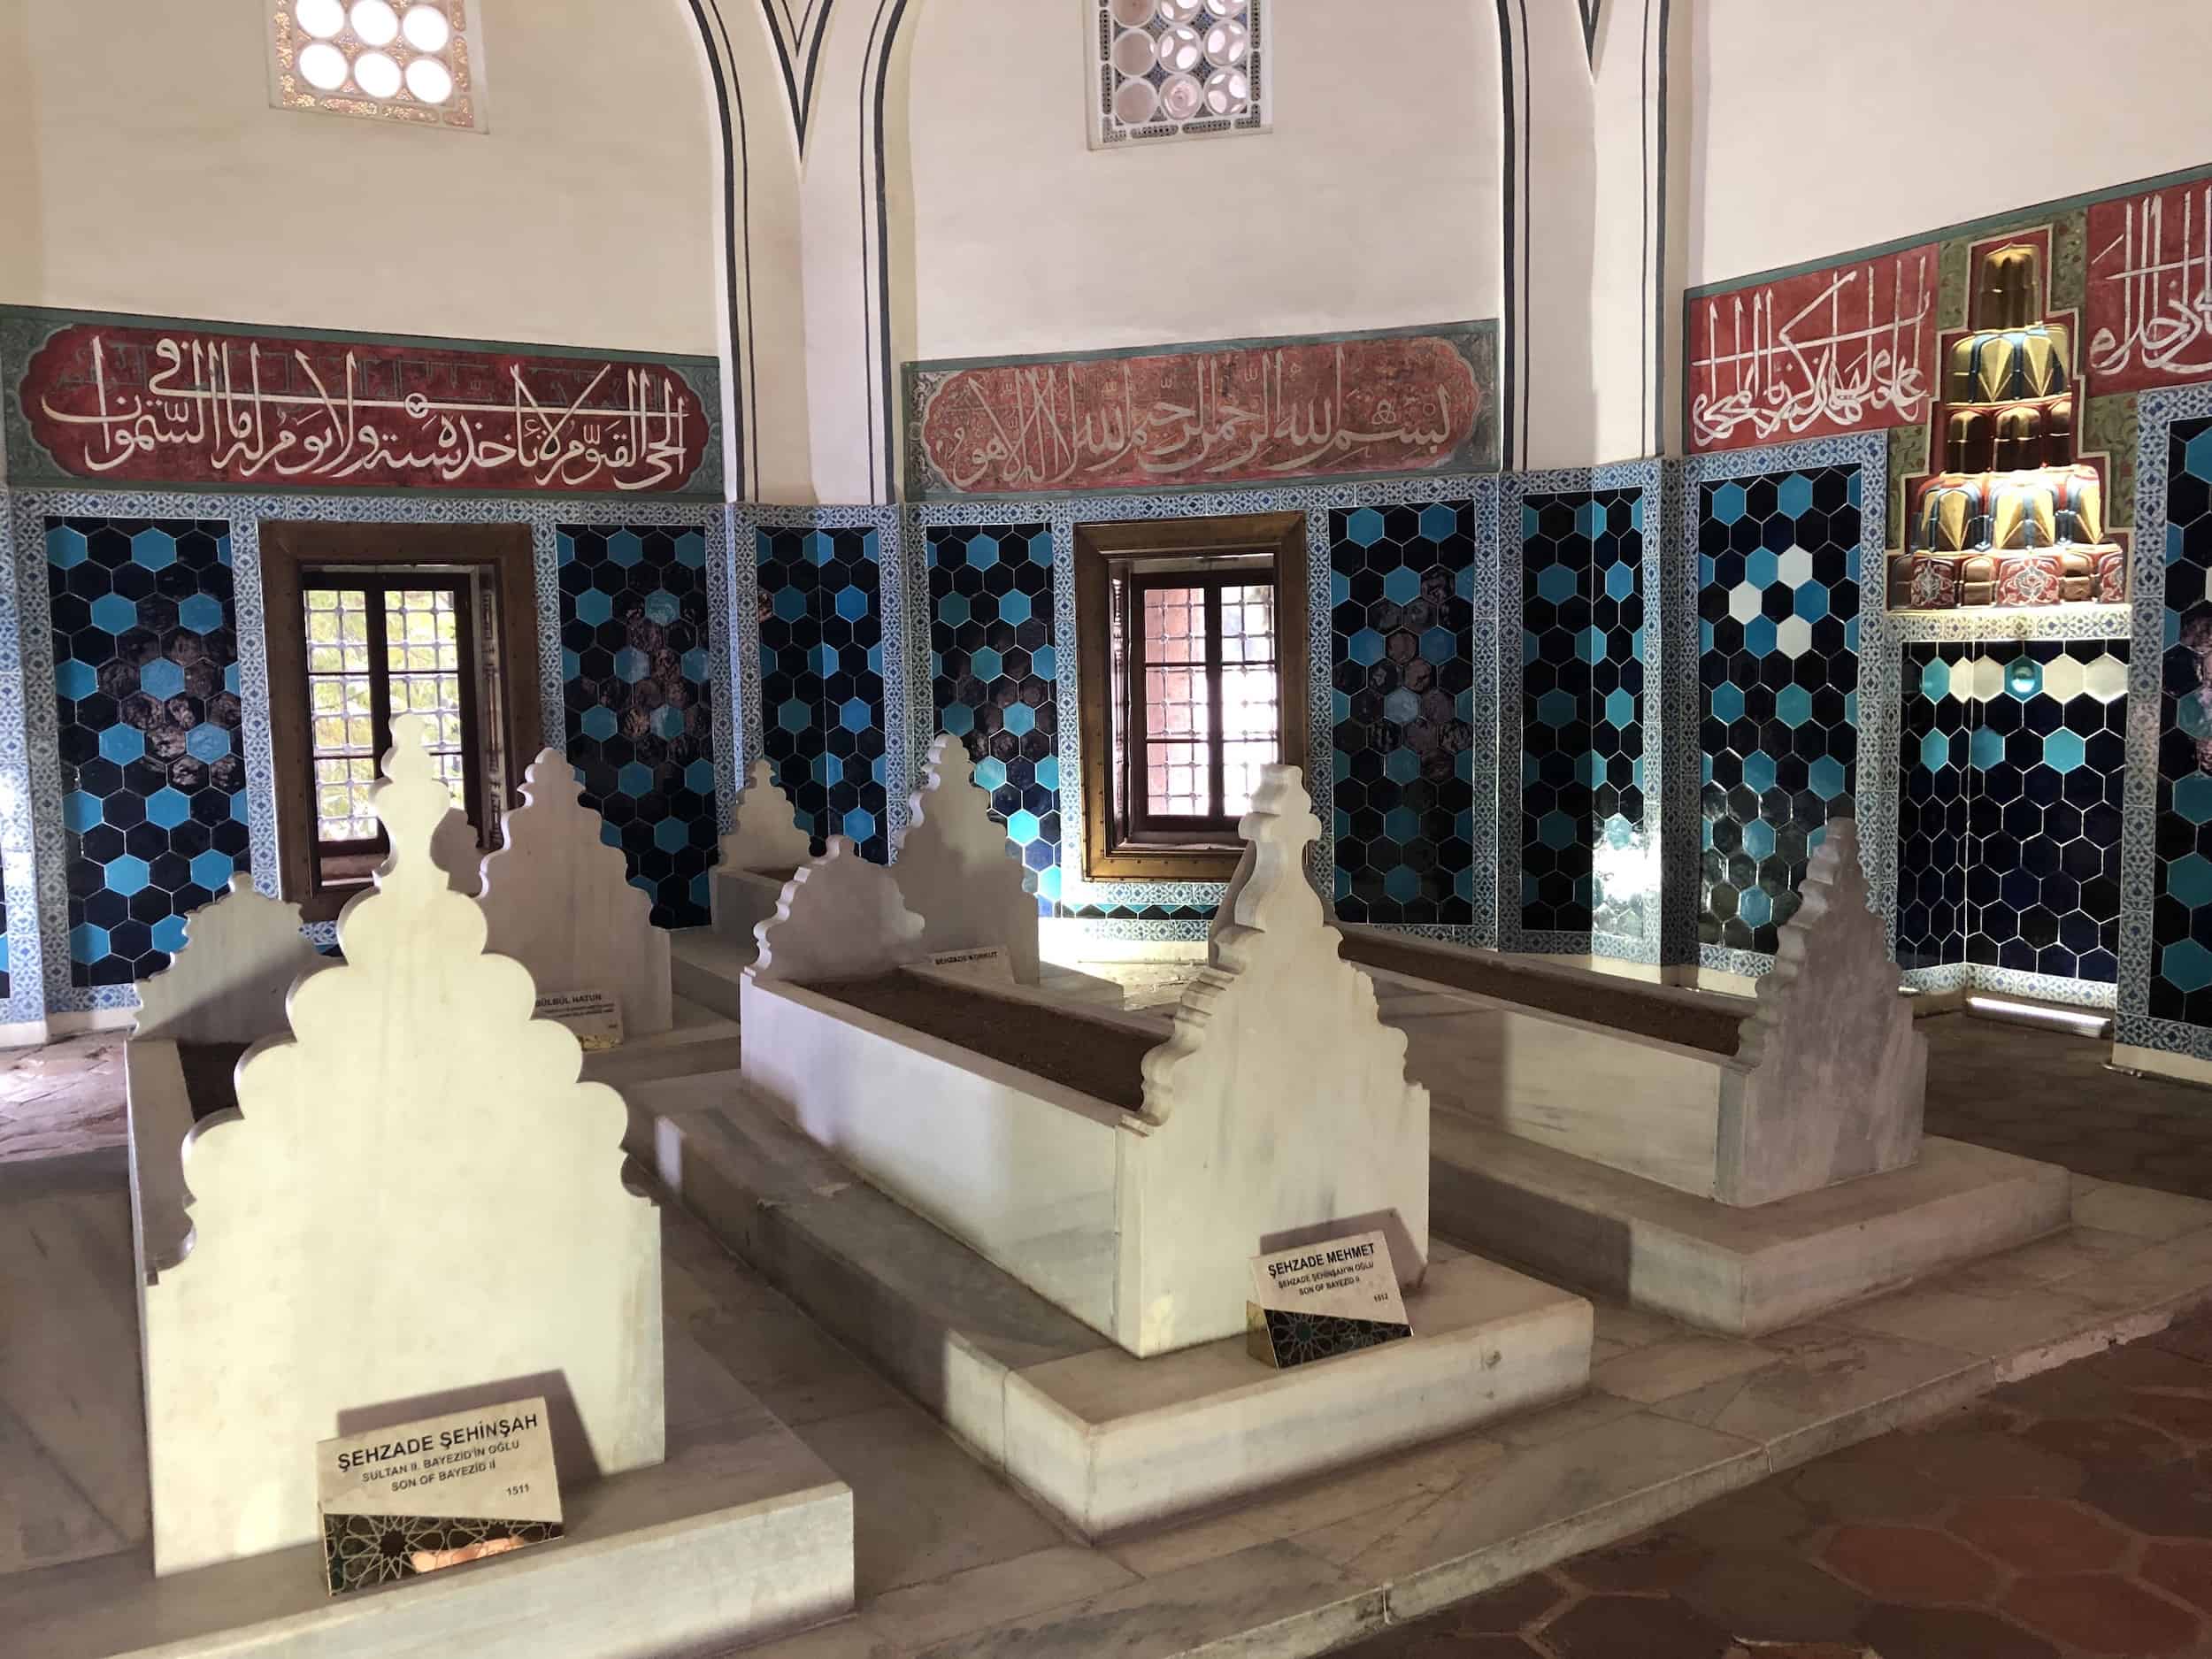 Tomb of Şehzade Ahmed at the Muradiye Complex in Bursa, Turkey